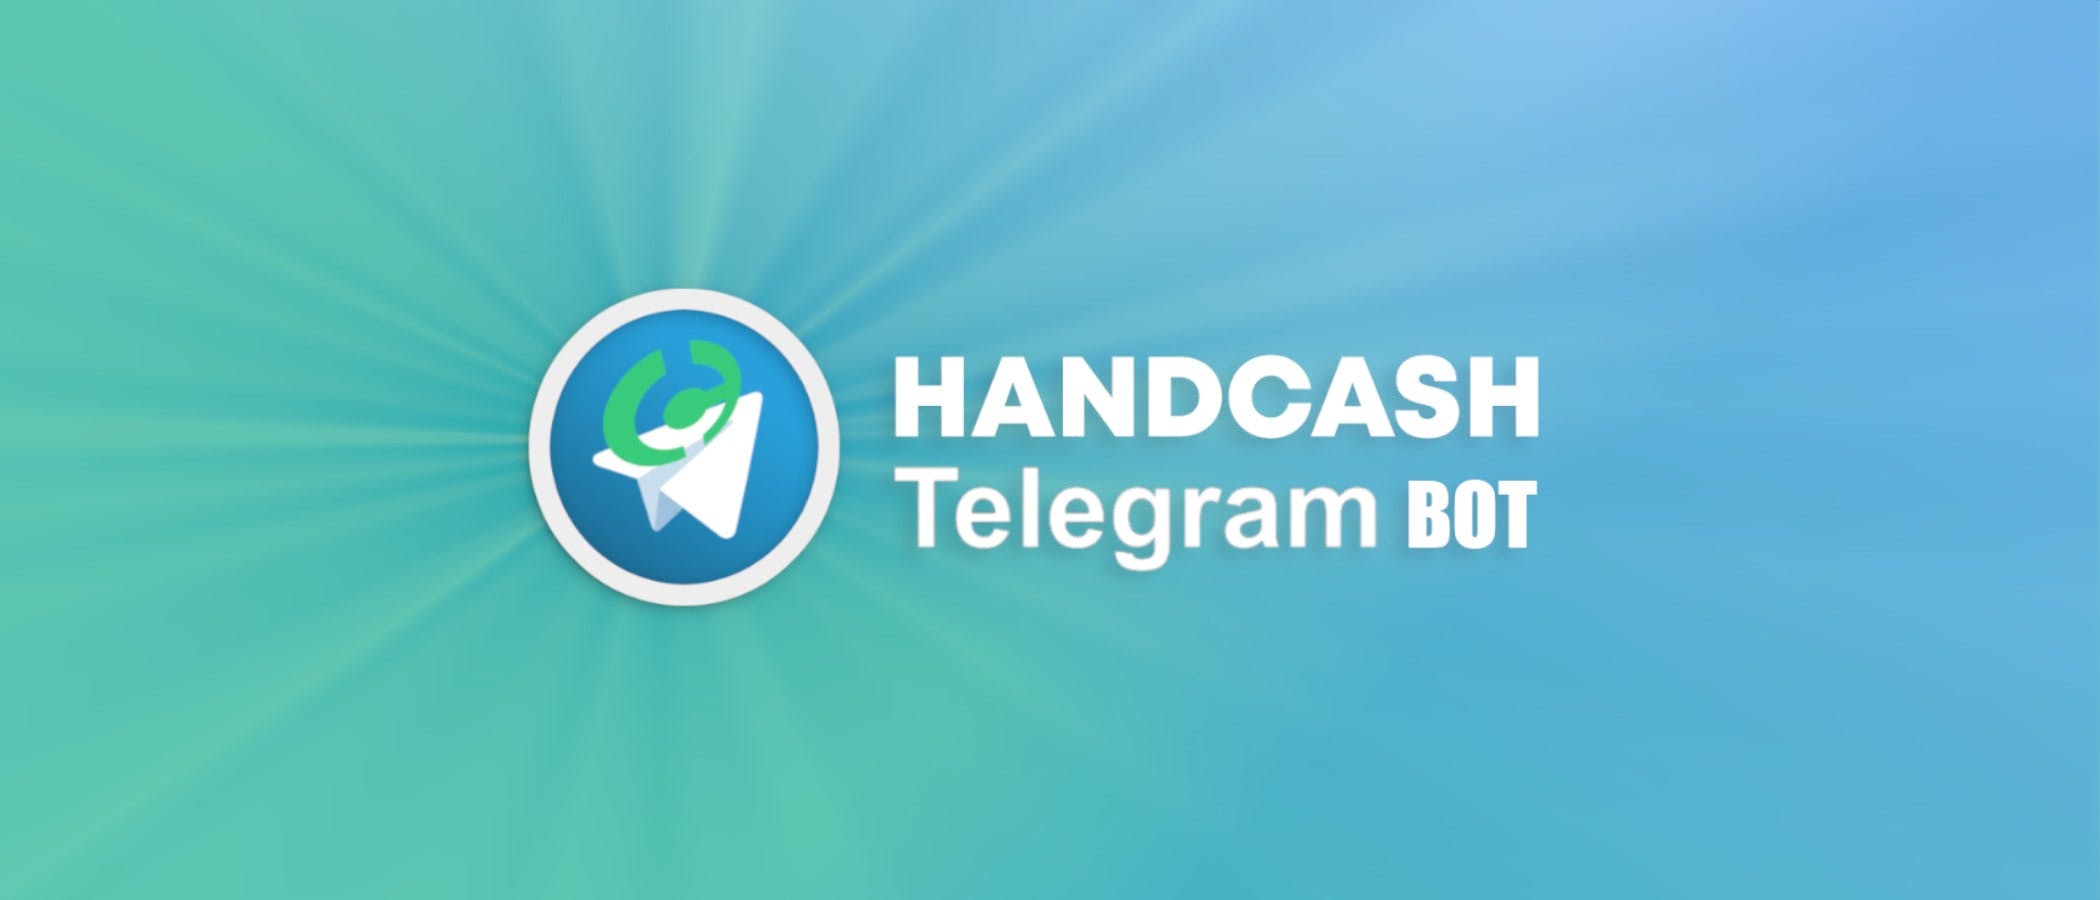 HandCash Telegram Bot